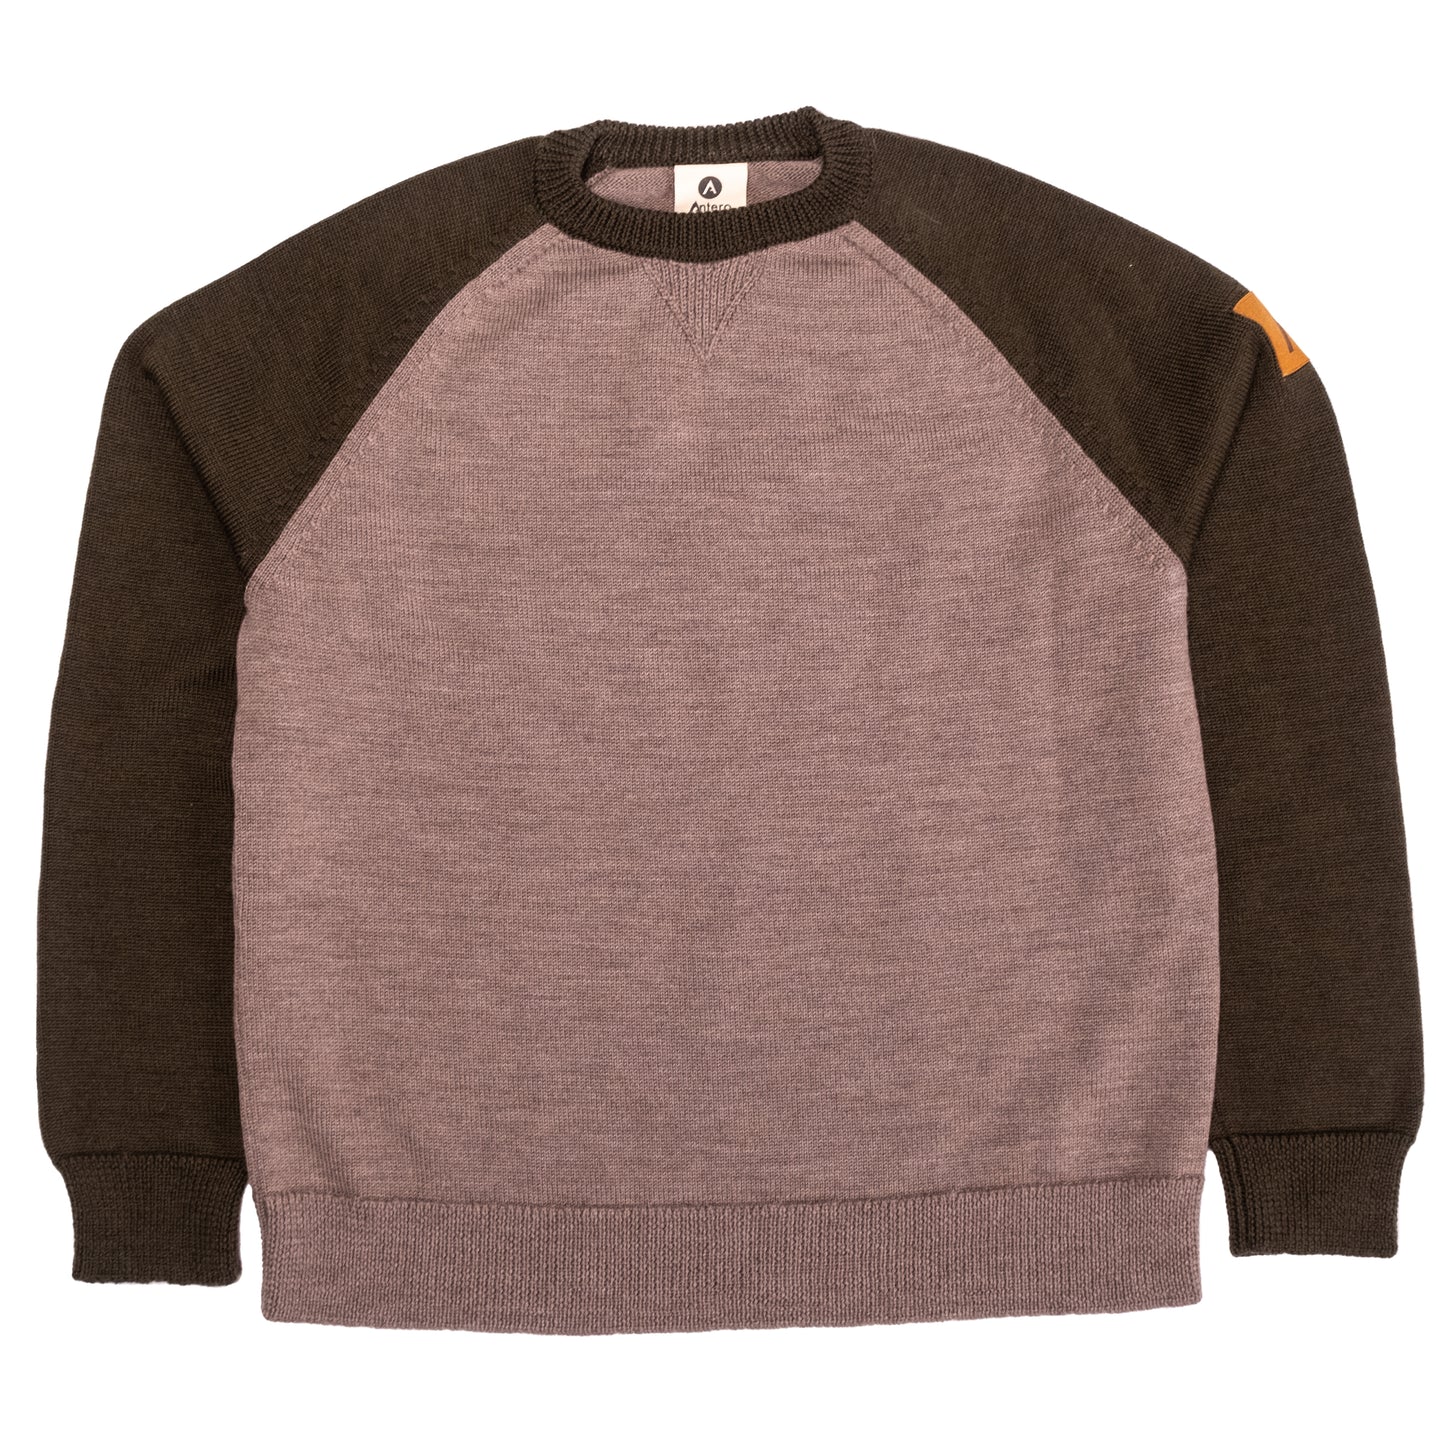 Colorado Merino Wool Sweater - Olive / Taupe